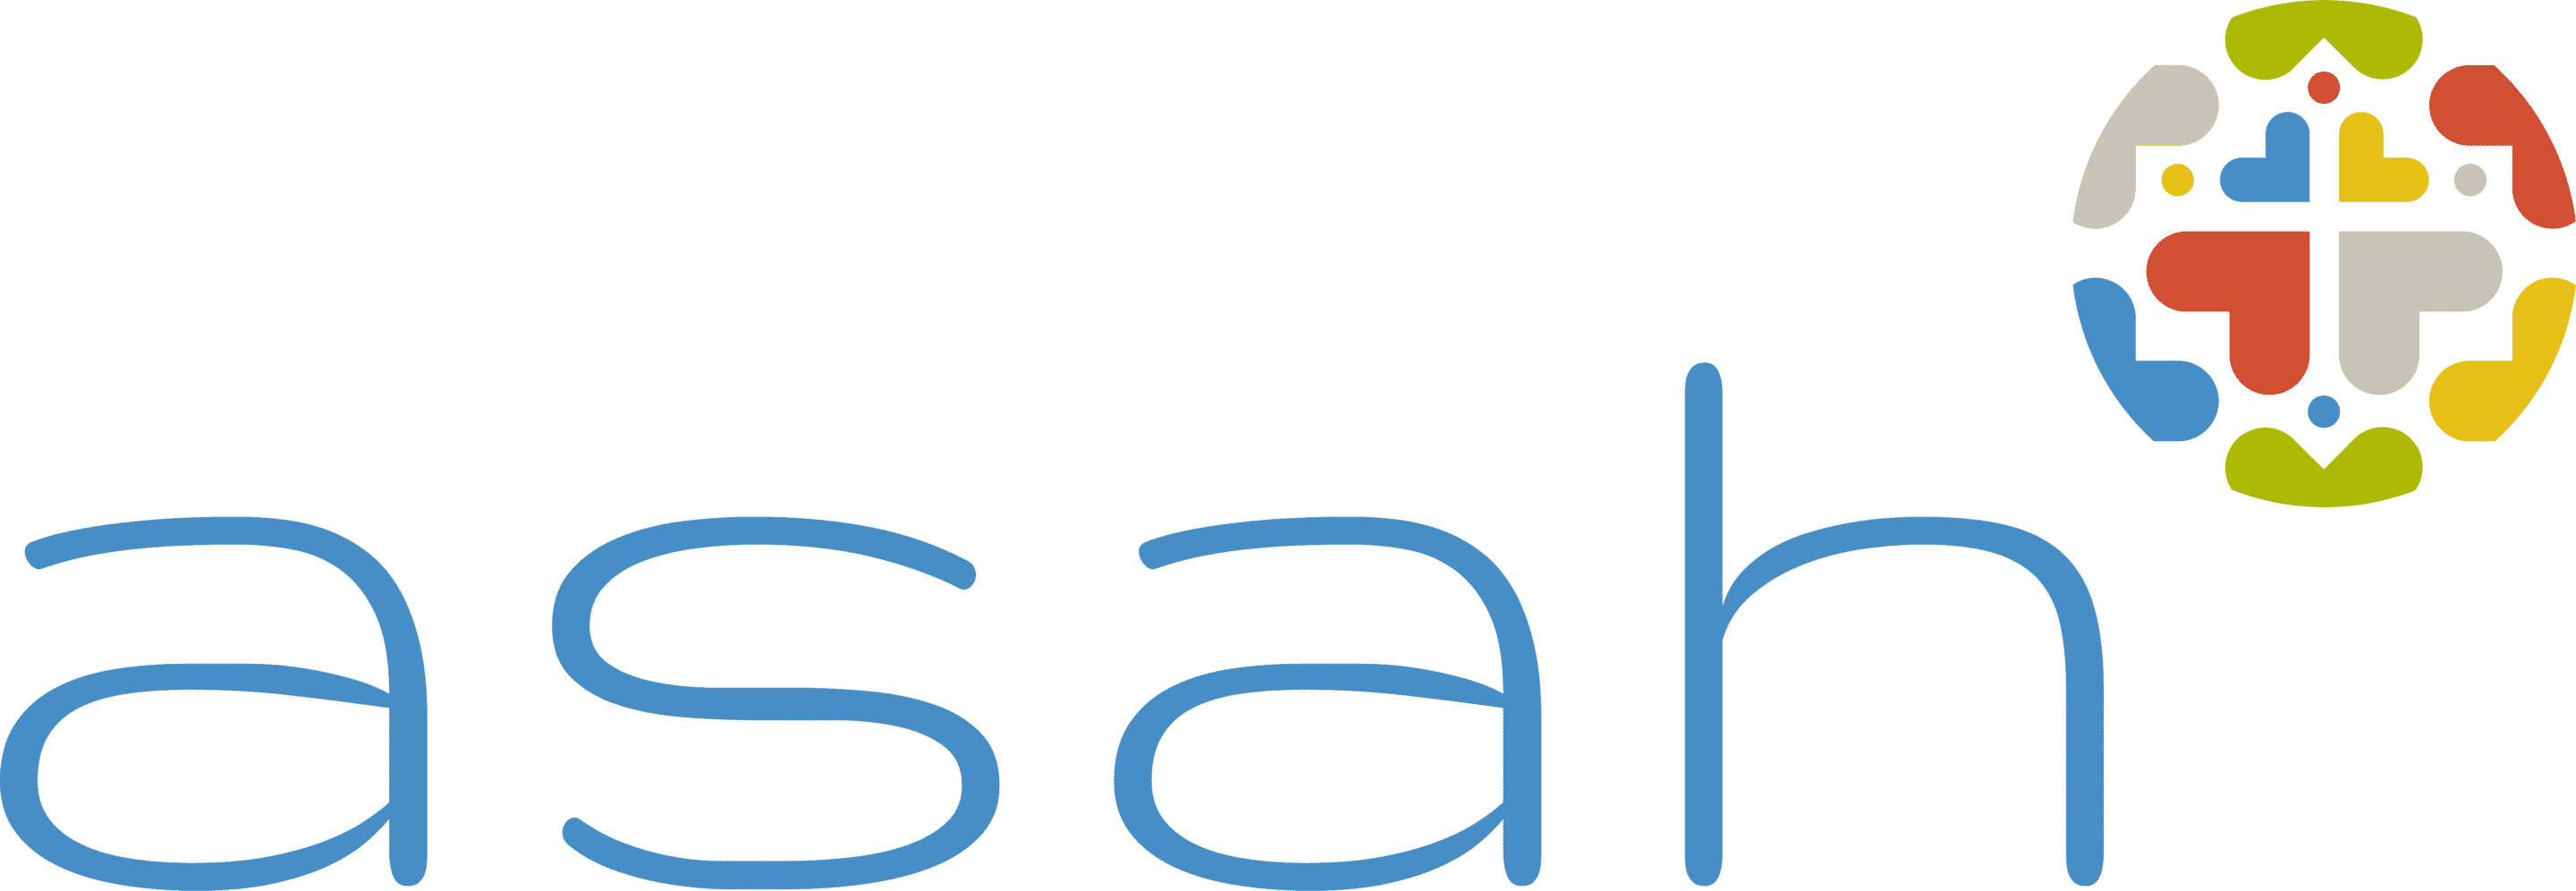 Logo ASAH